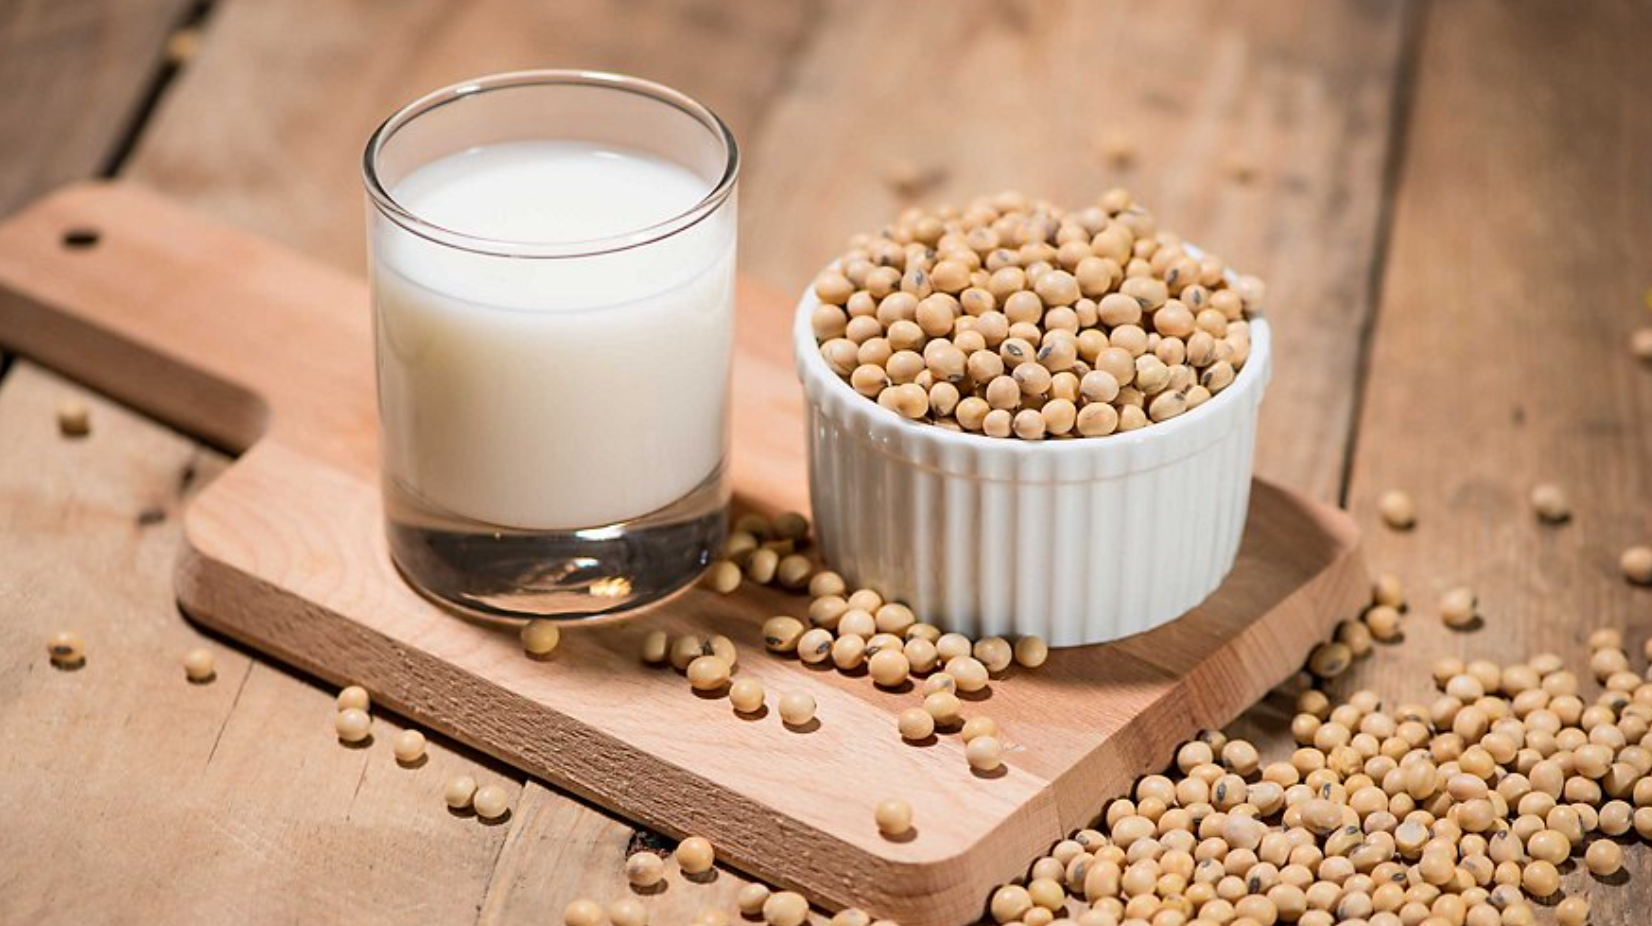 Tetra Pak develops breakthrough whole soya processing method